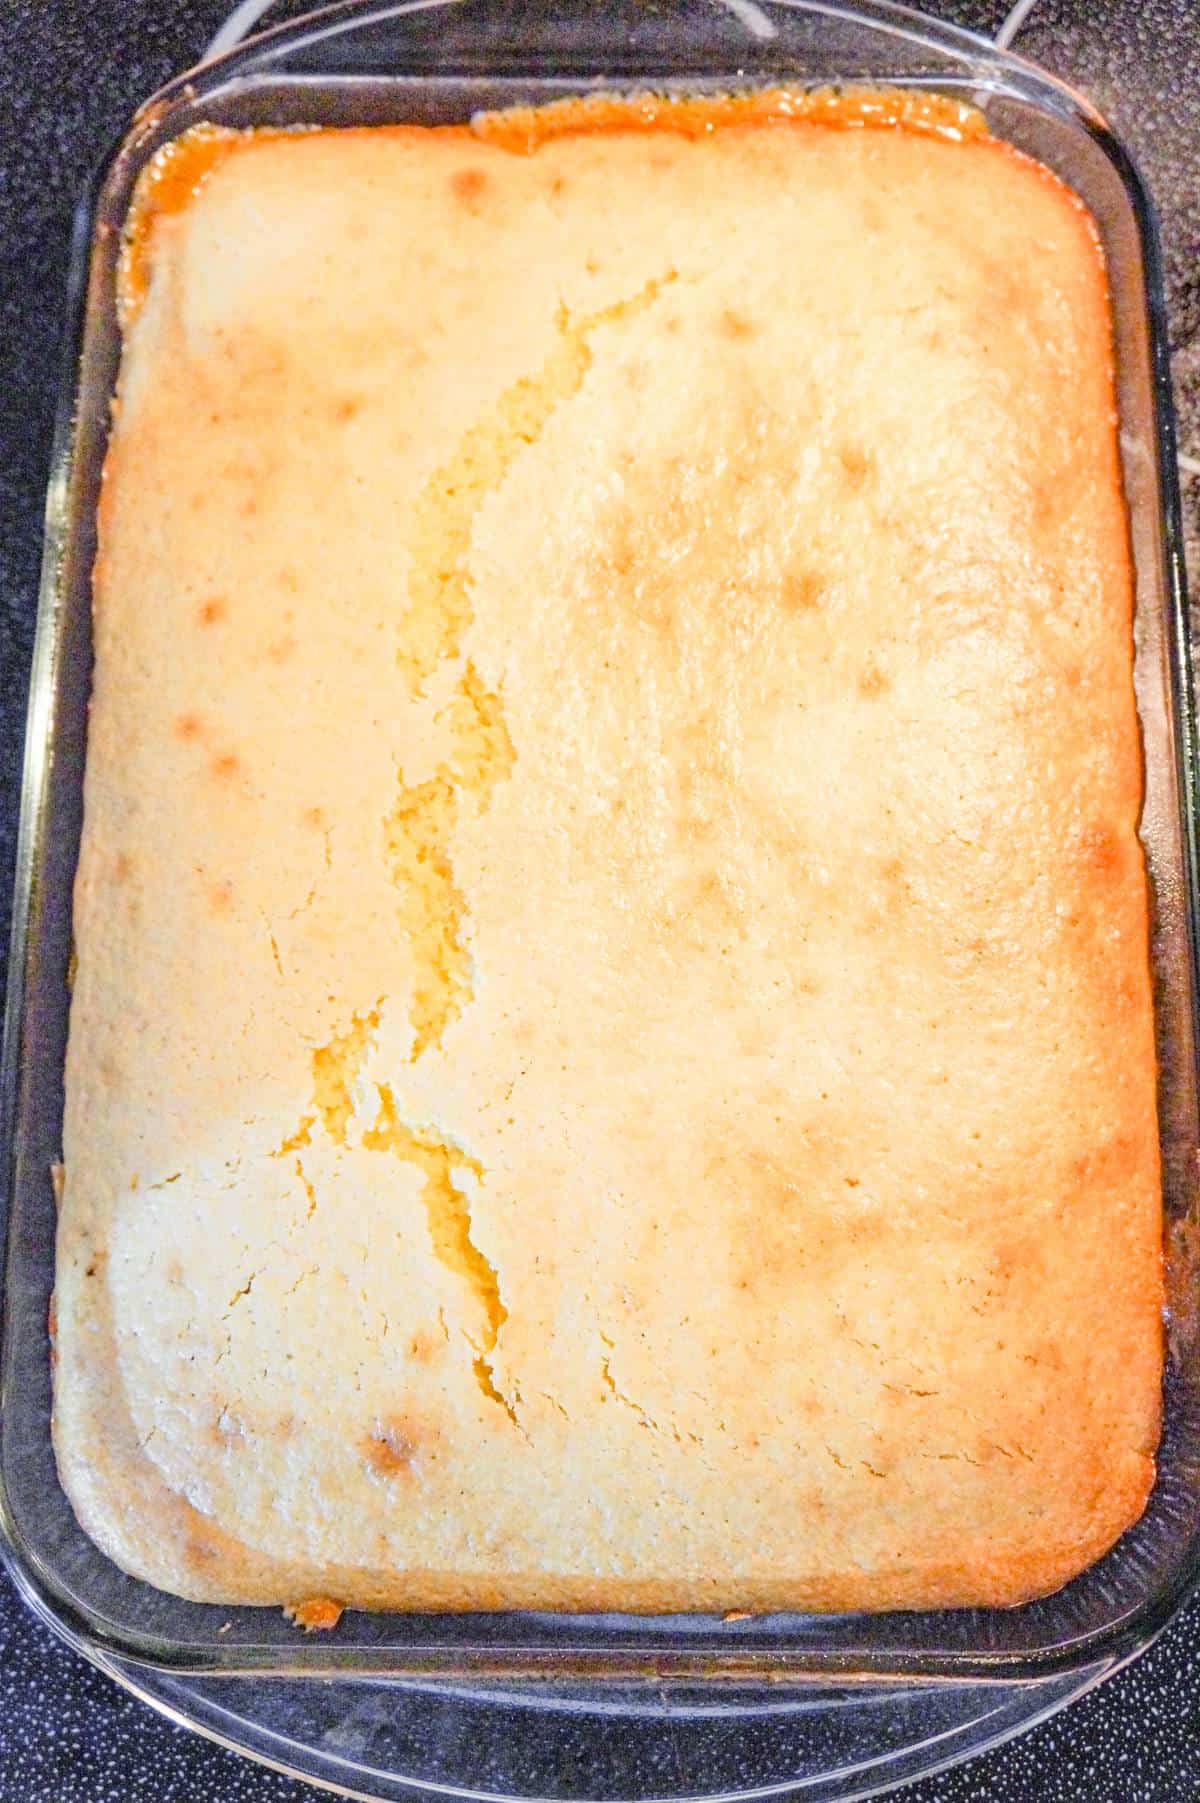 cornbread on top of casserole in a baking dish